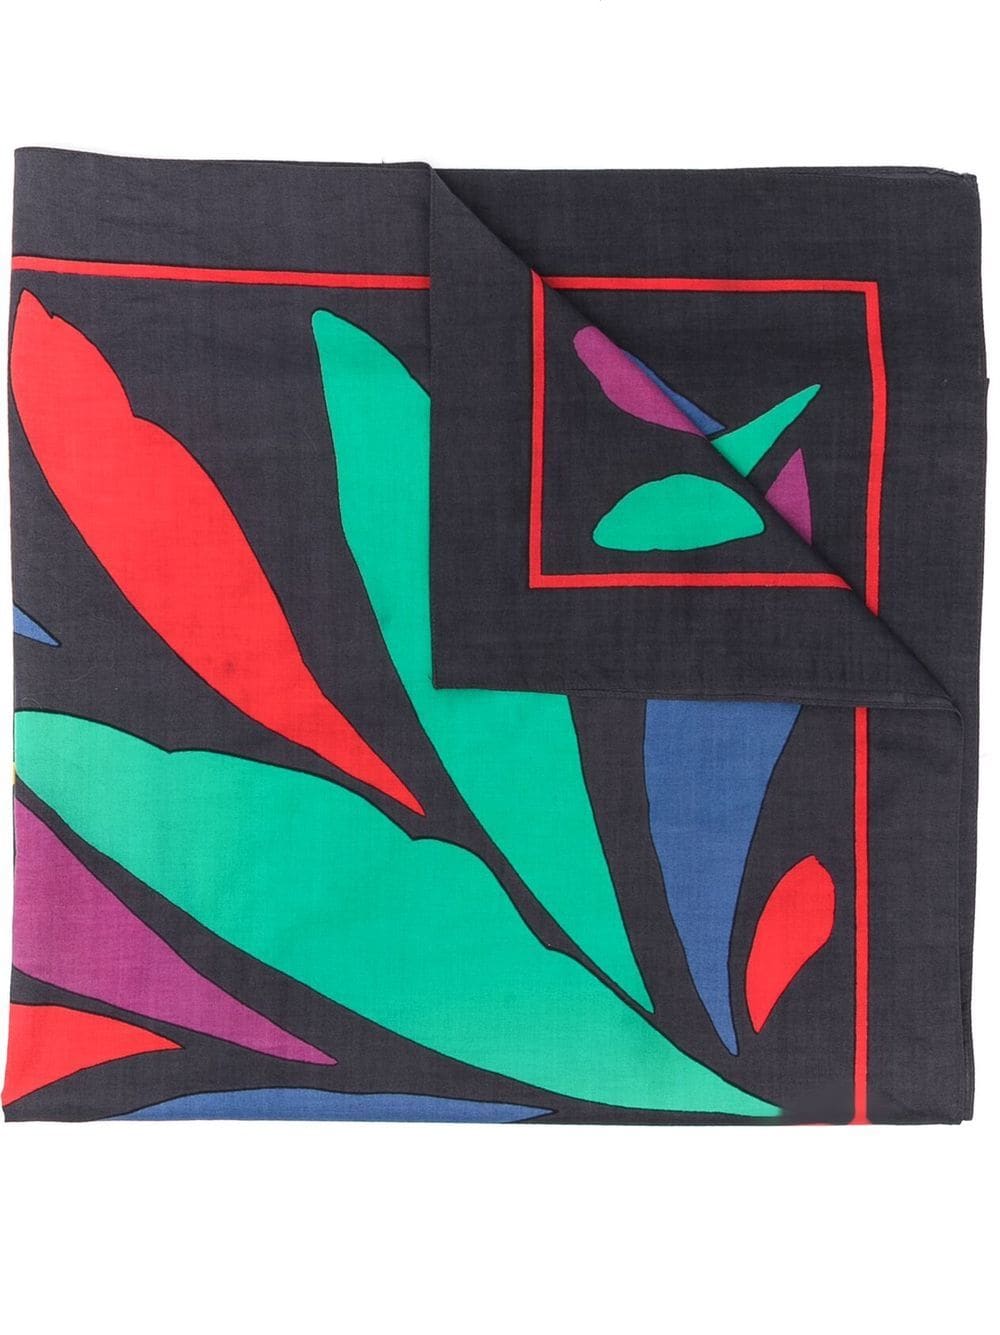 1990s geometric print scarf